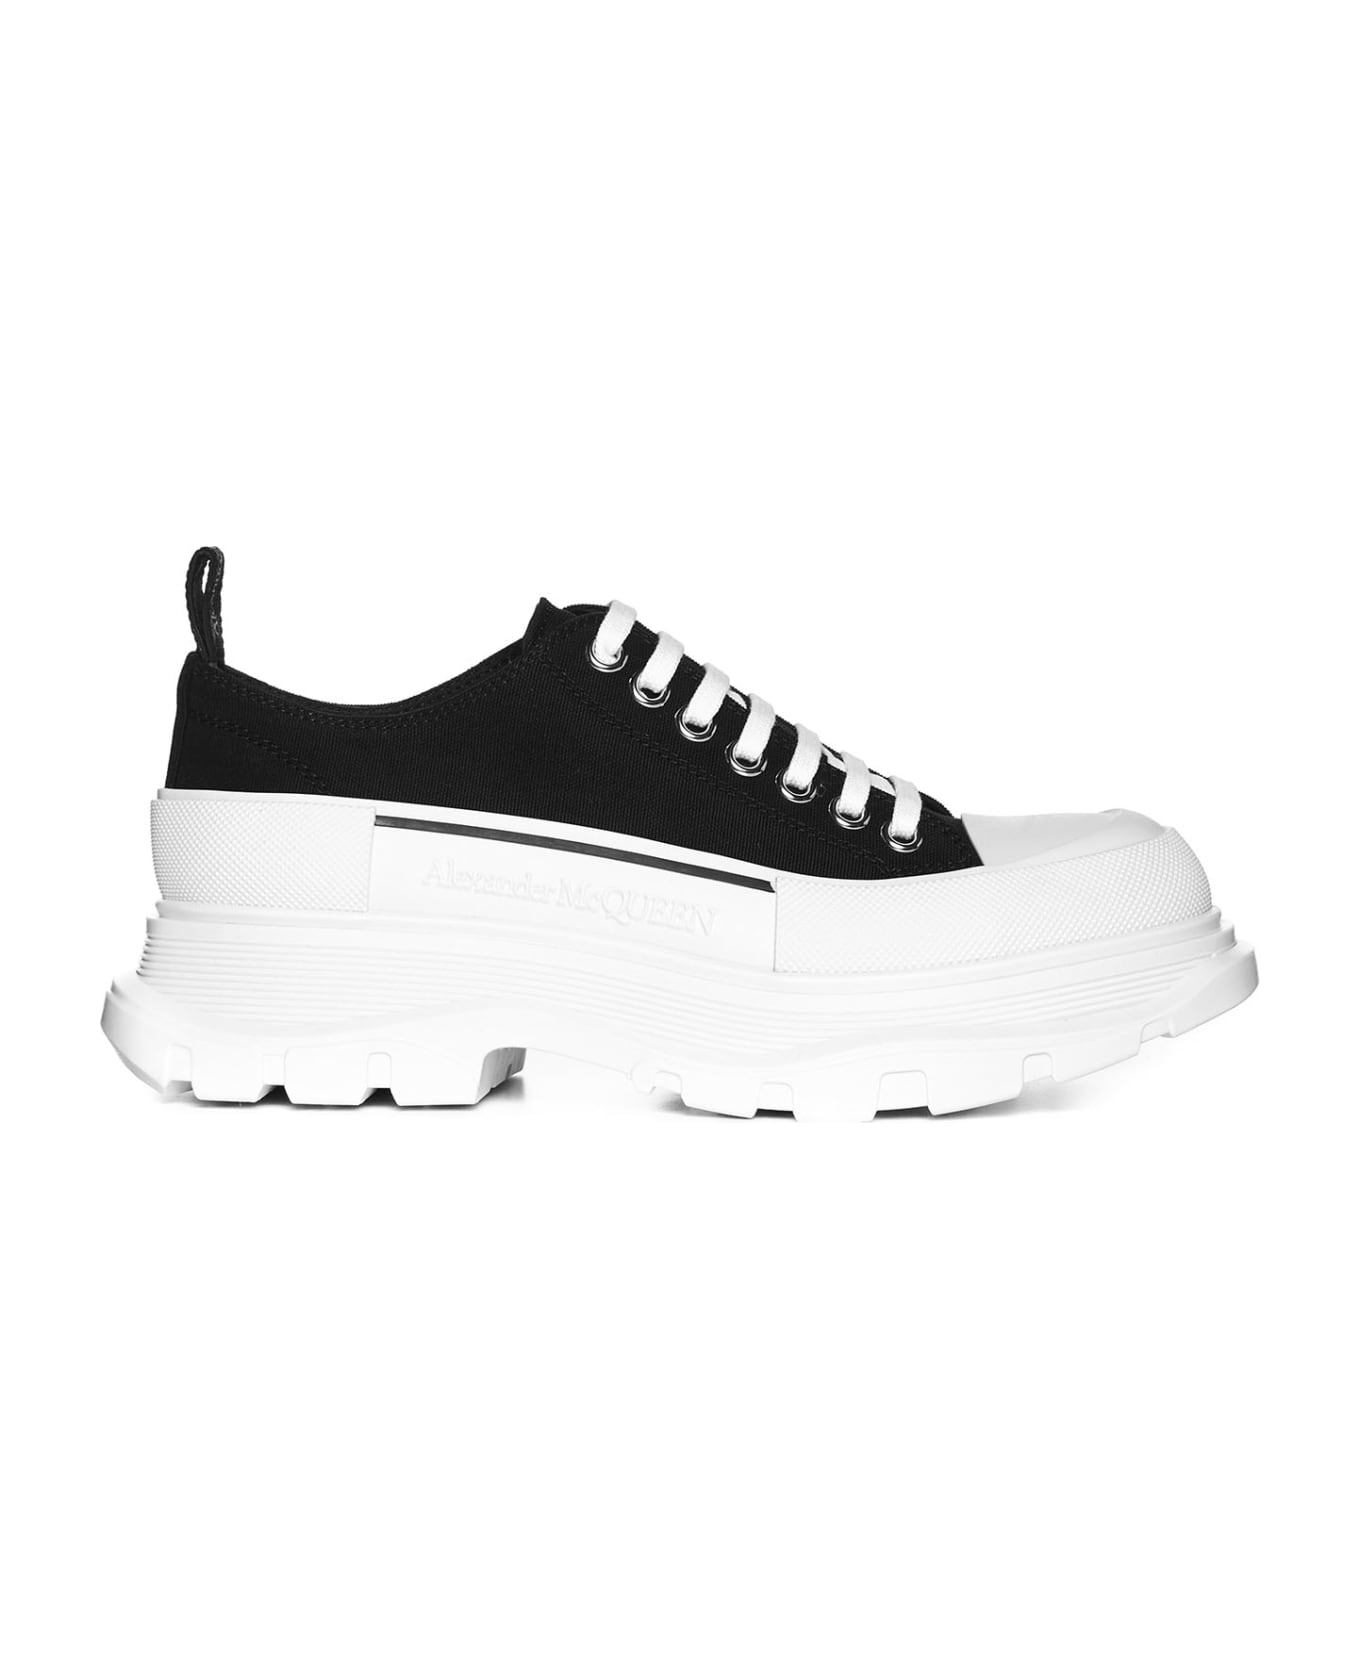 Alexander McQueen Sneaker Tread Slick - Black/white